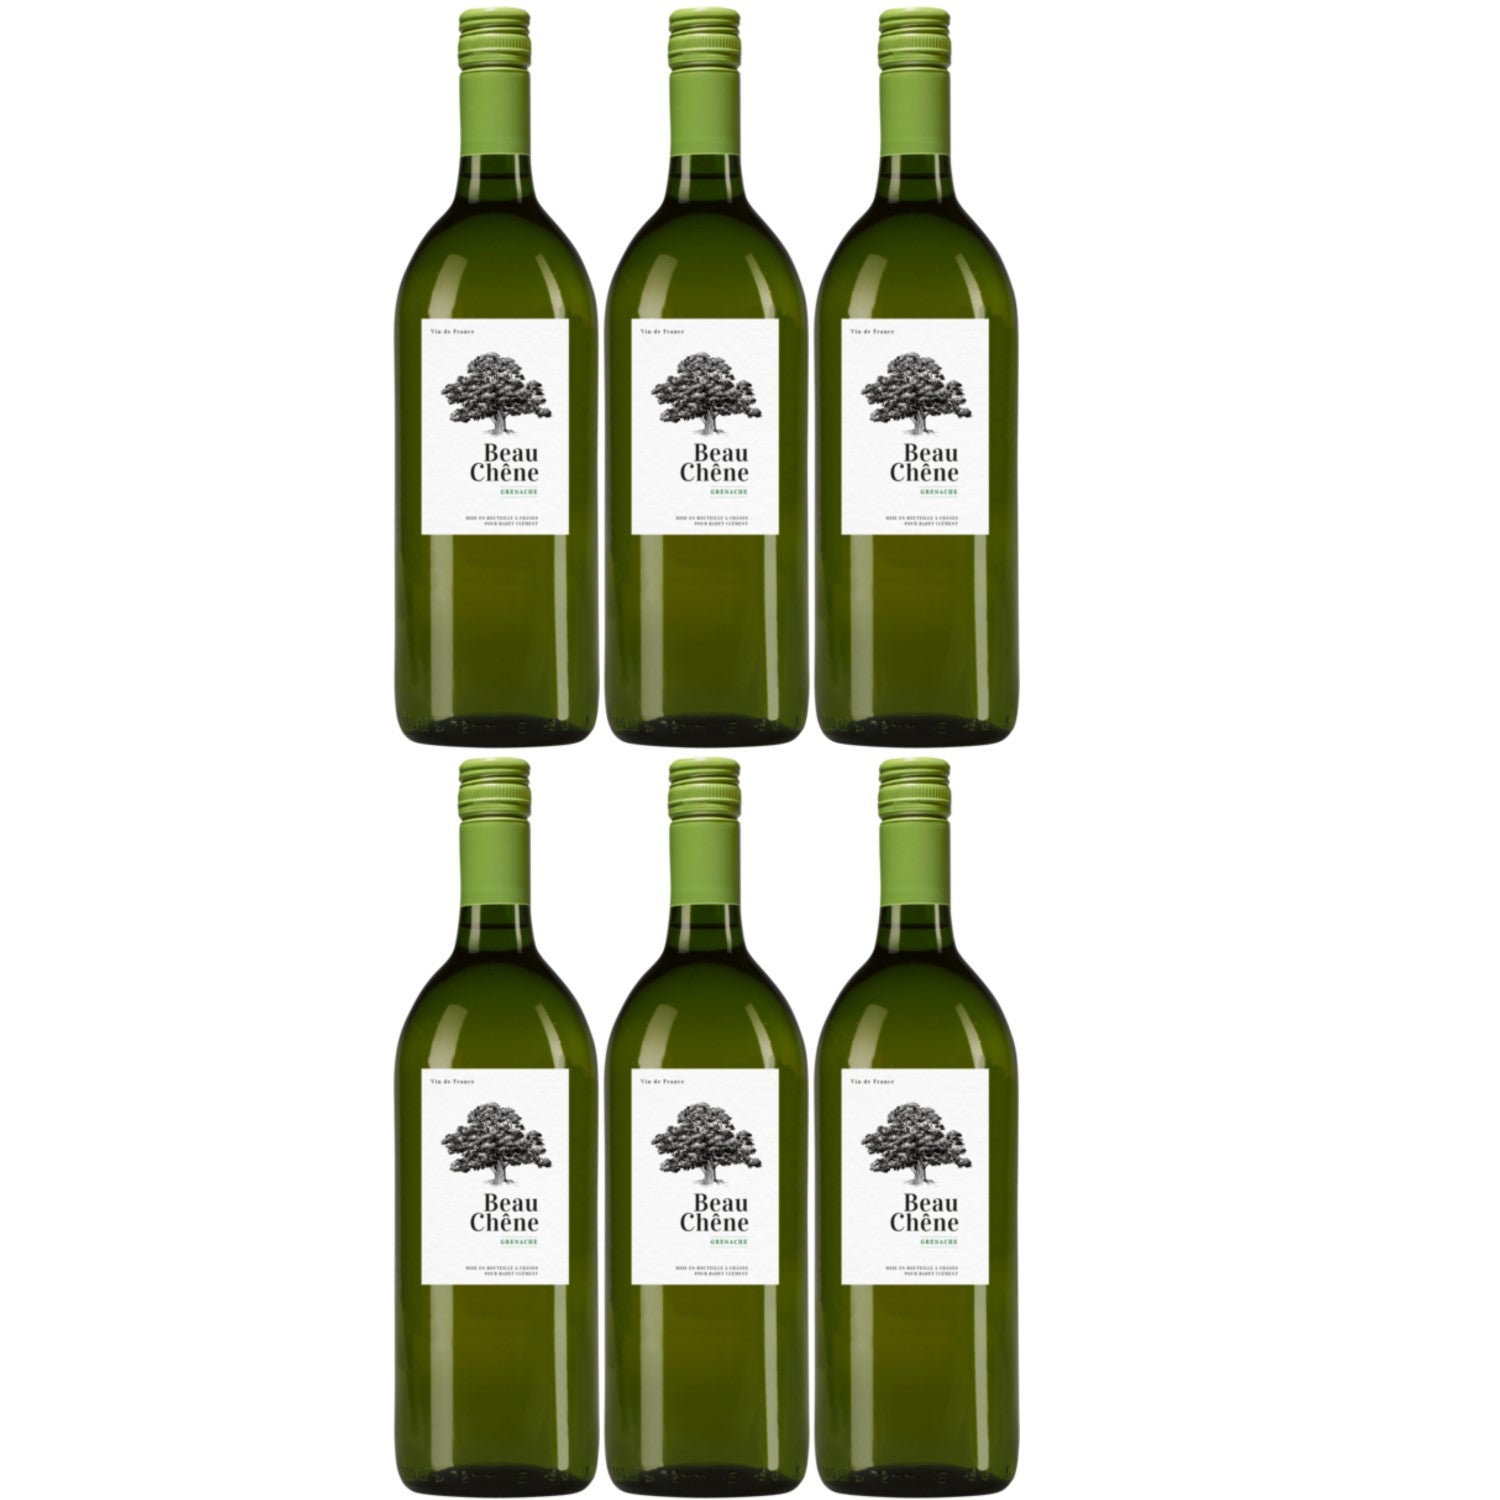 Beau Chêne Grenache Blanc Vin de France Weißwein Wein trocken Frankreich (6 x 0.75l) - Versanel -